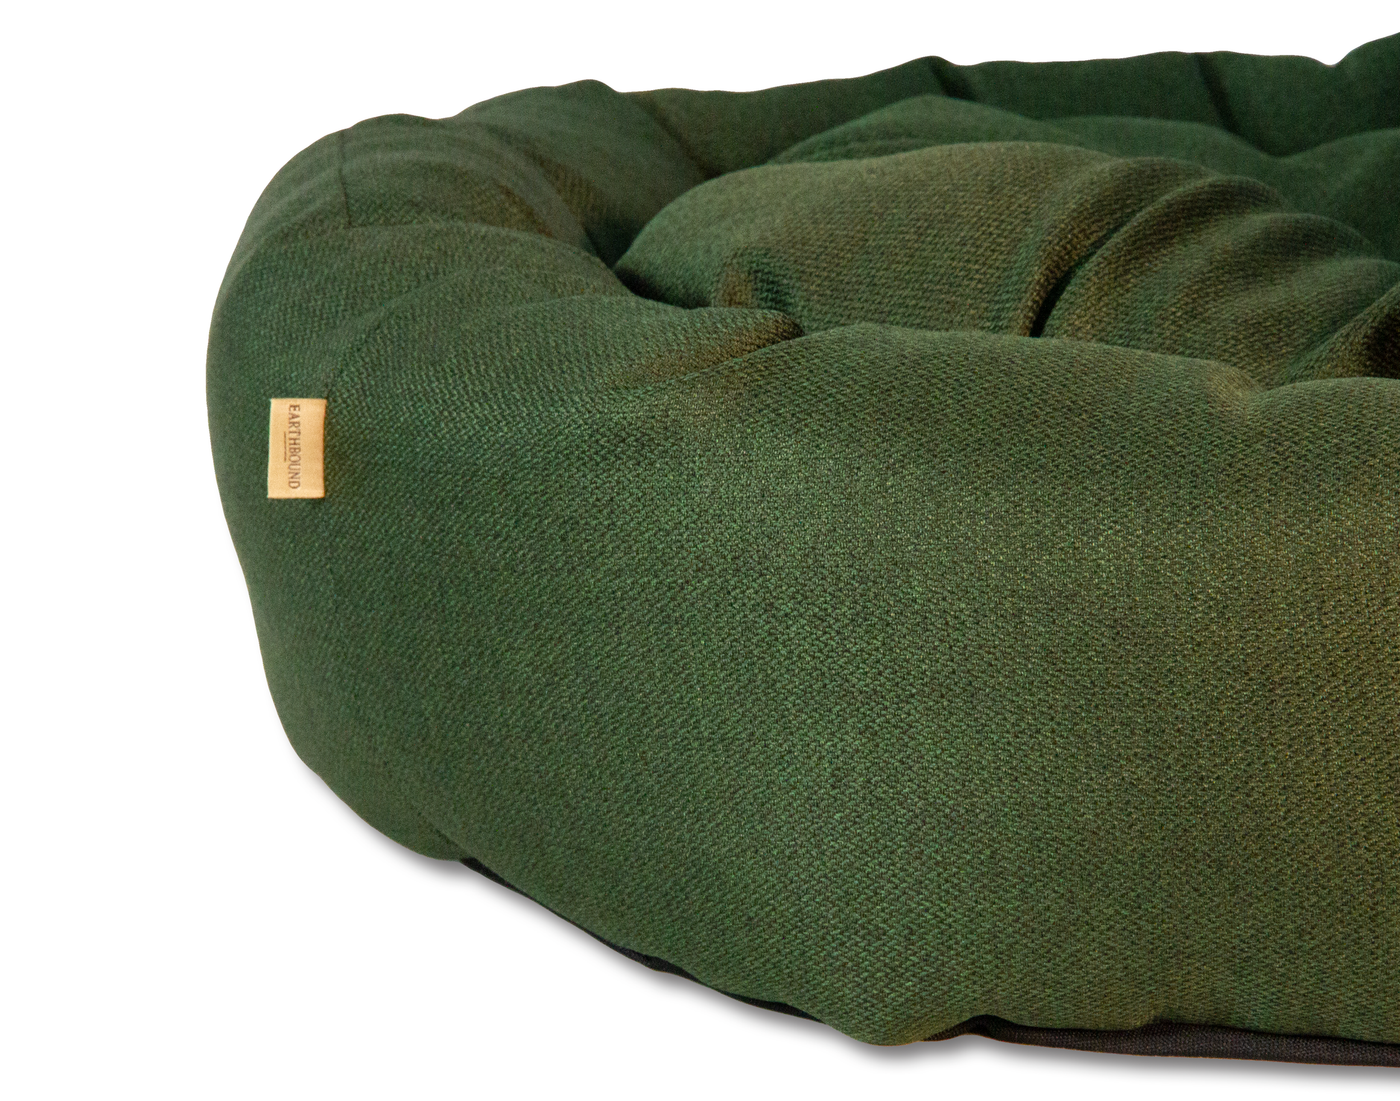 Close up of green donut morland dog bed